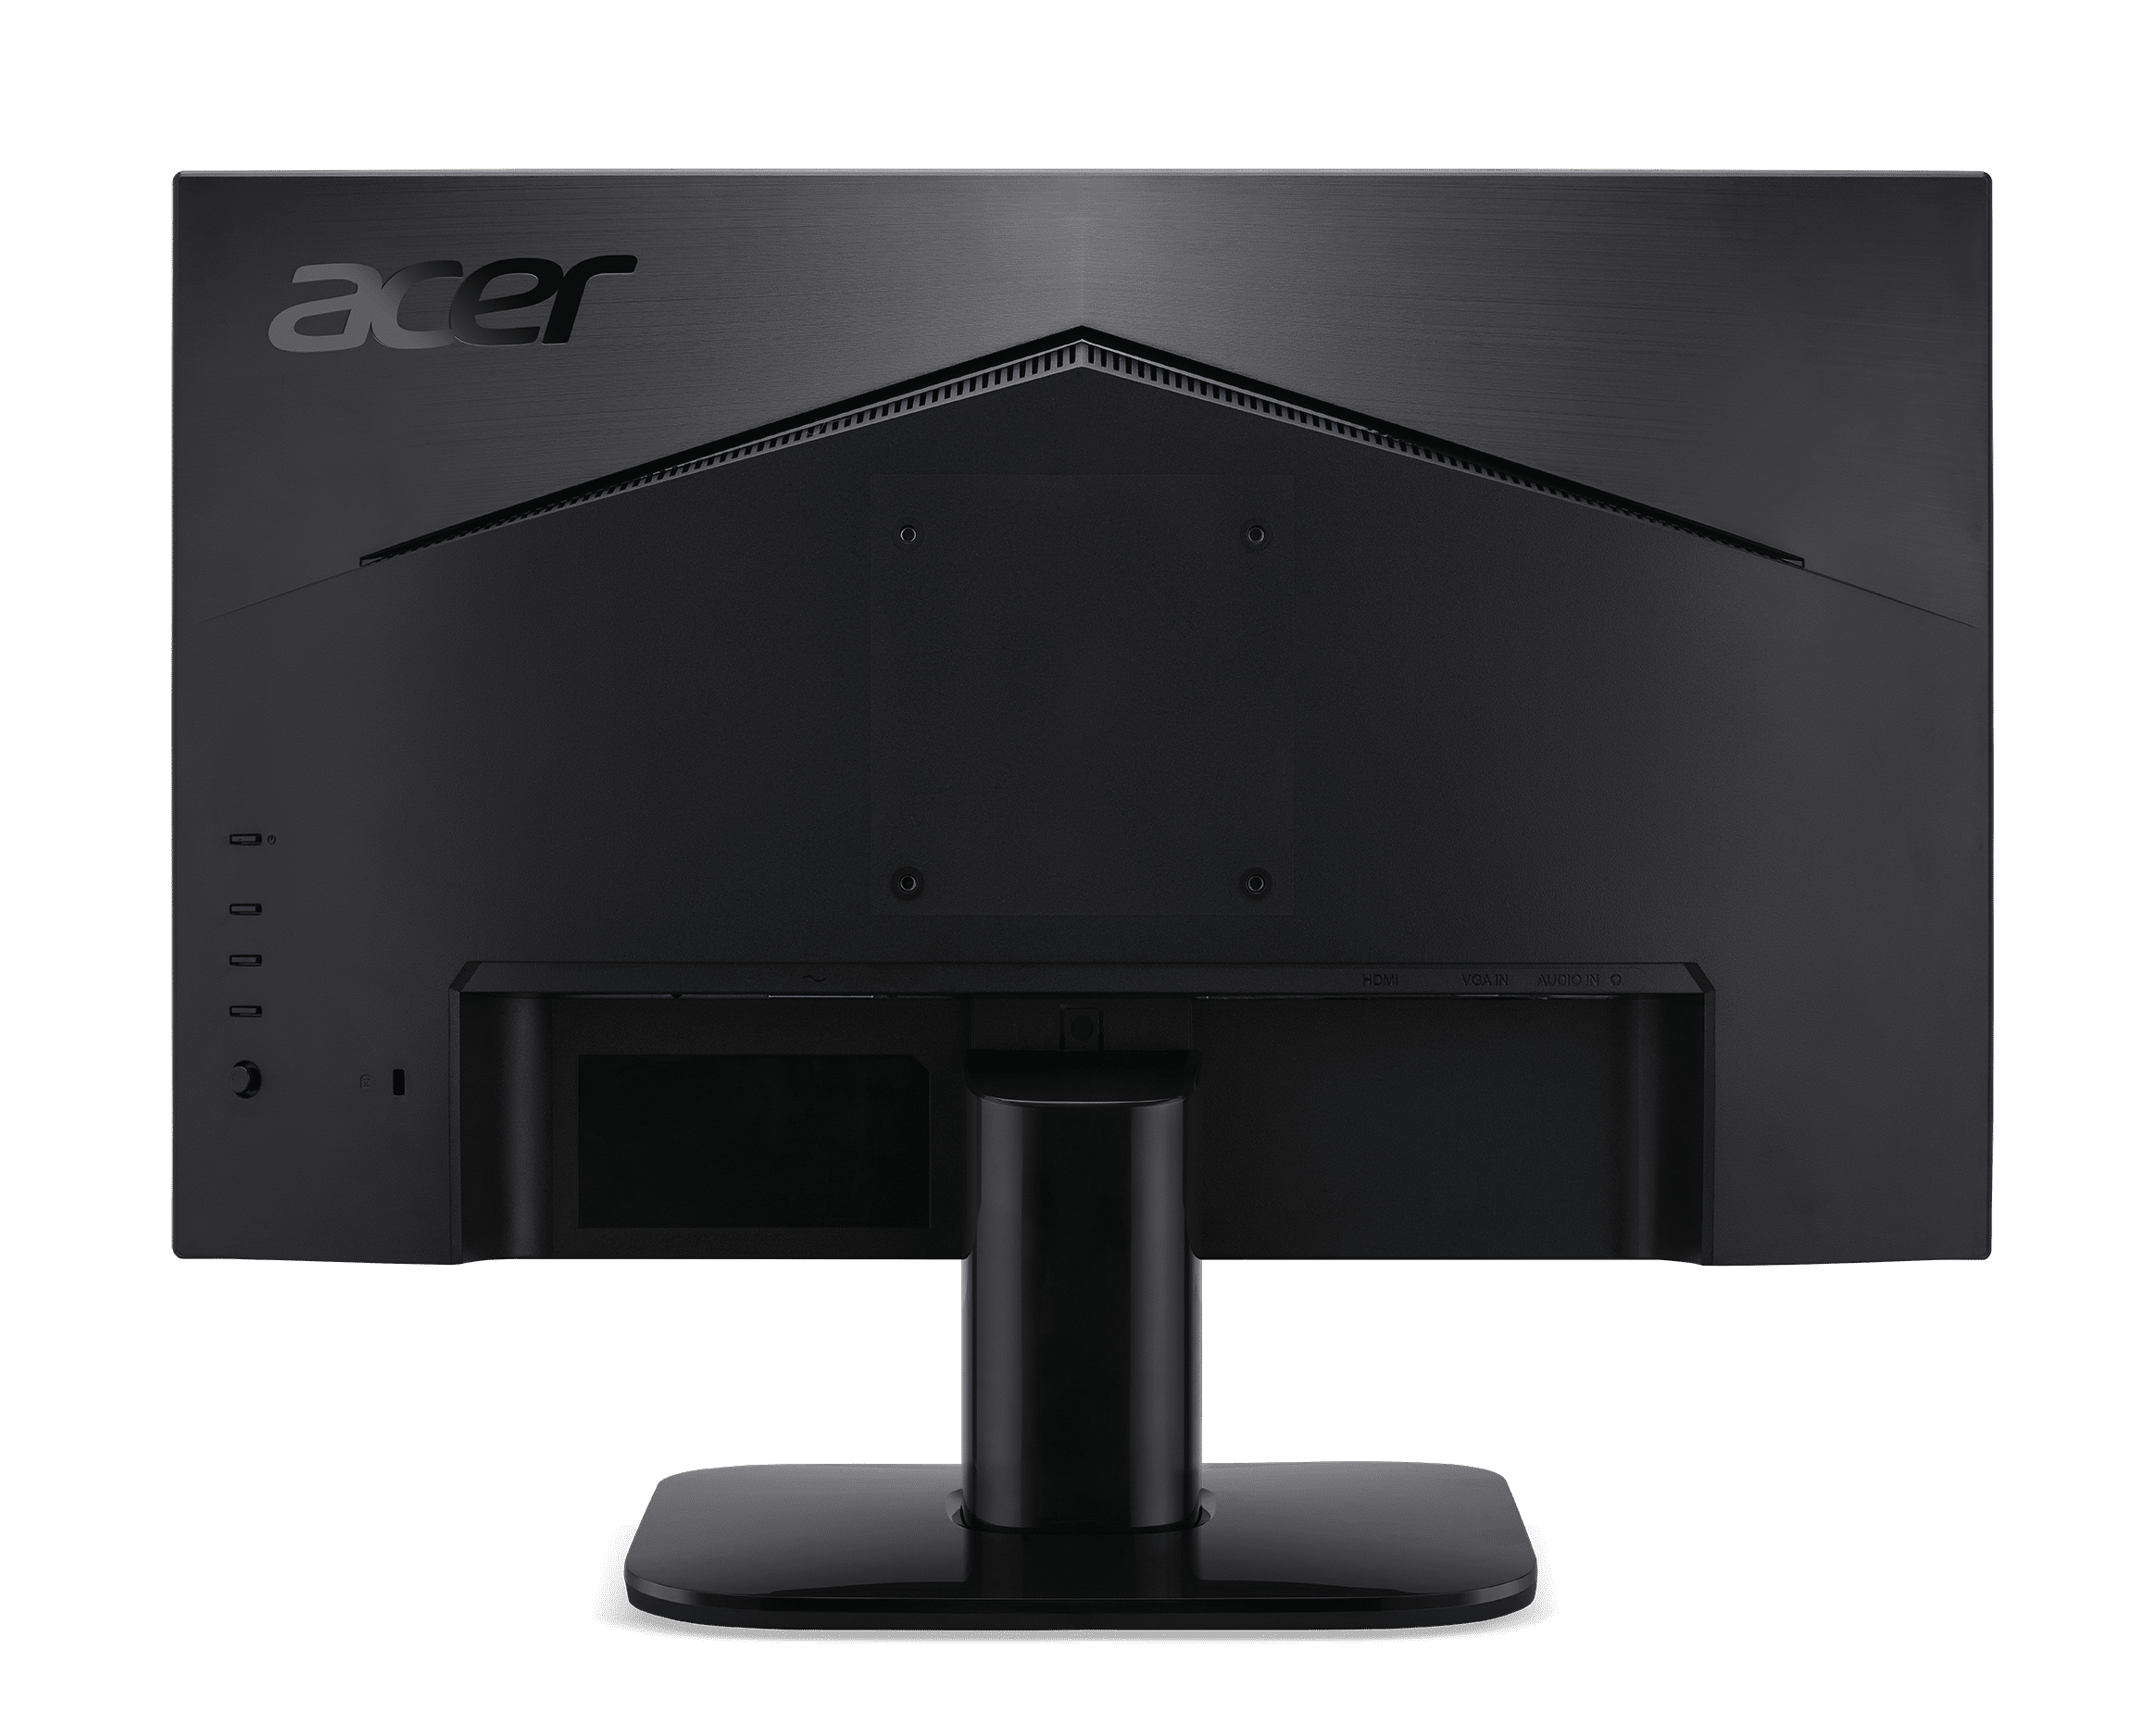 Acer 27” Full HD Monitor, 1920 x 1080, 75Hz Refresh Rate with AMD Radeon  FreeSync, KA272 Bi